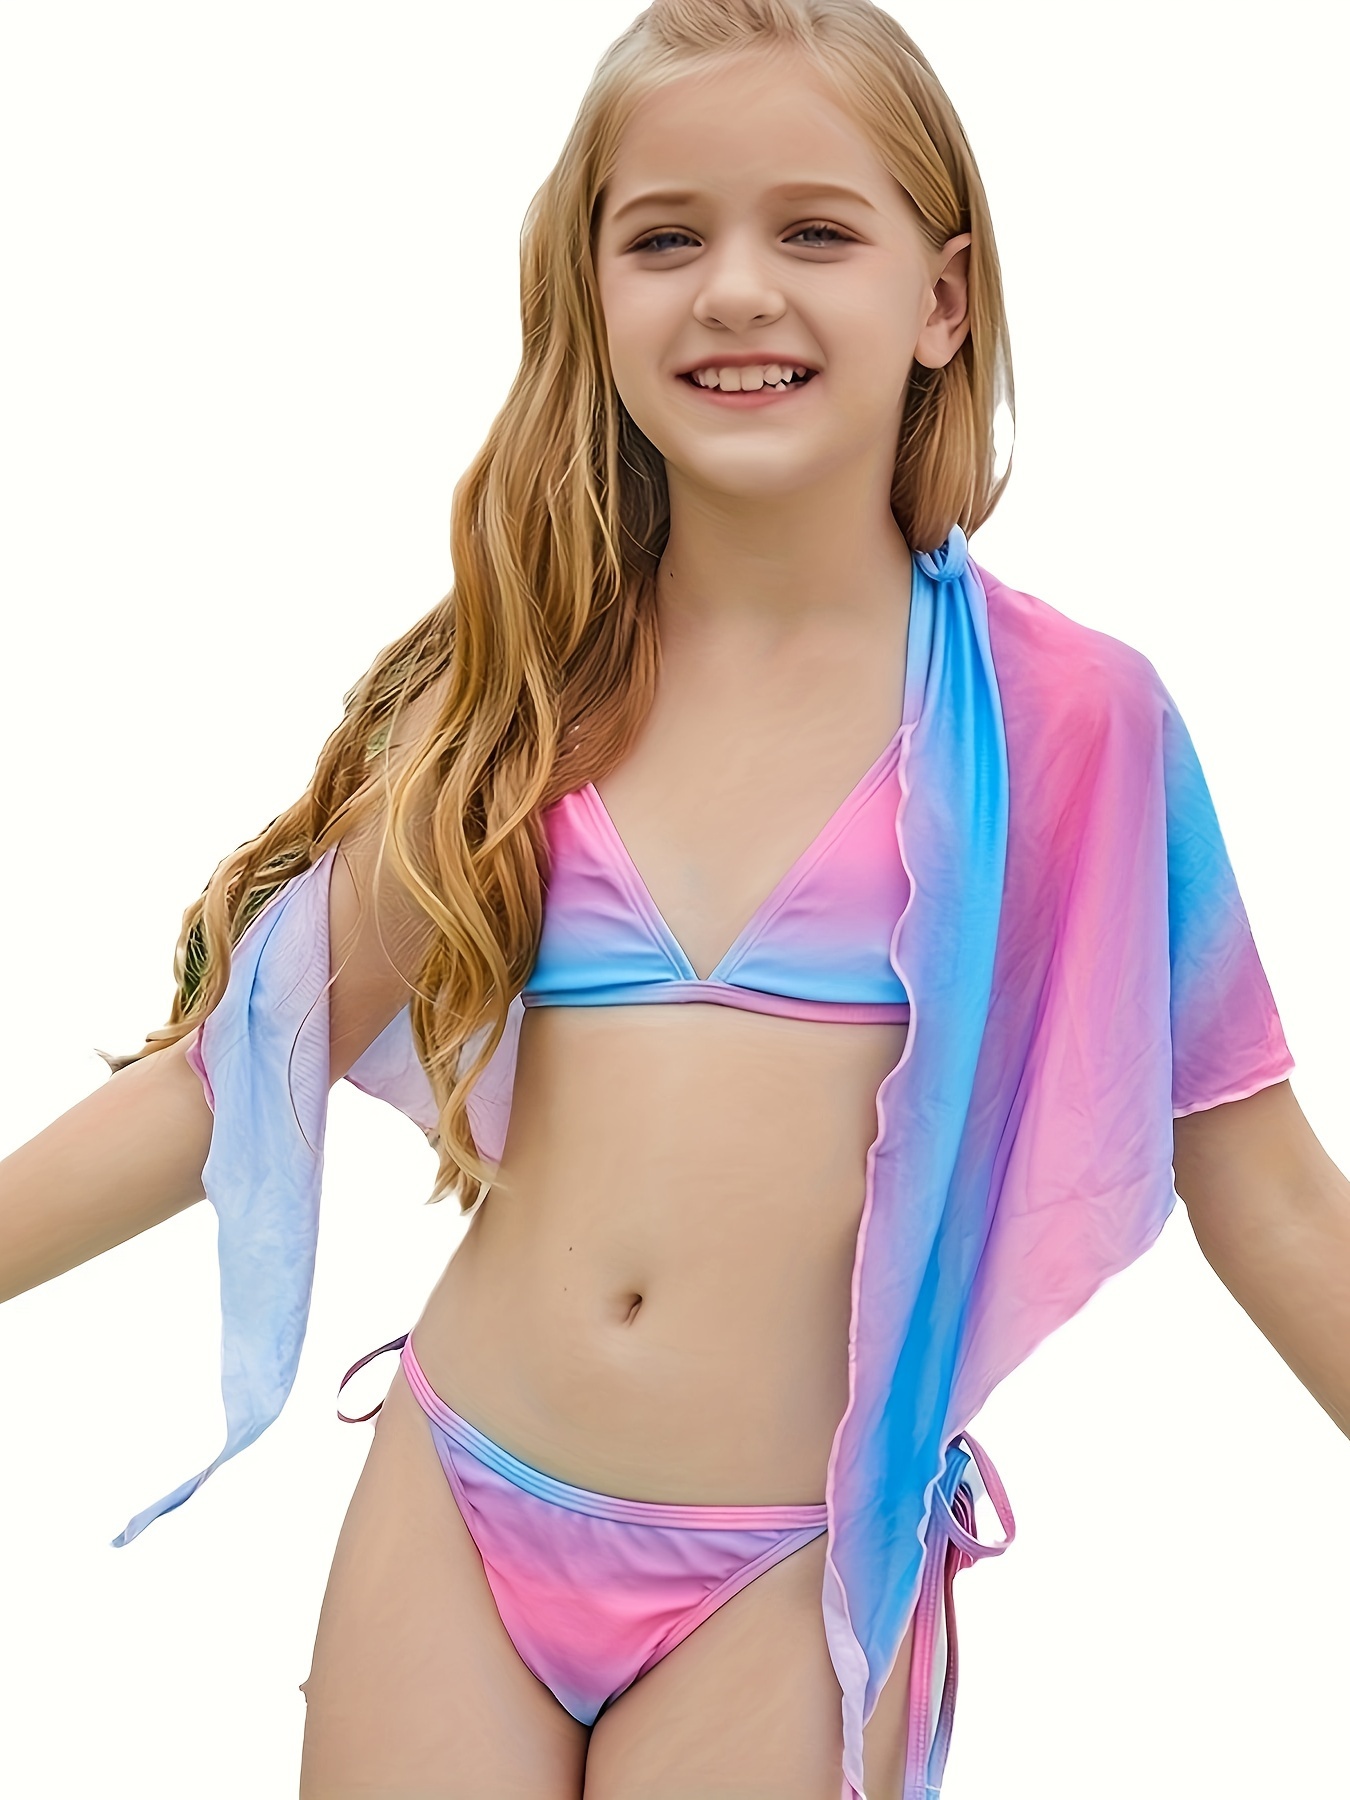 Swimsuit / Swimwear/ Bikini / Girls Swimwear/ Tween Swimsuit/ Toddler  Swimsuit / Tropical Swimsuit / Tropical Swimsuit/ Swim Gift/ 